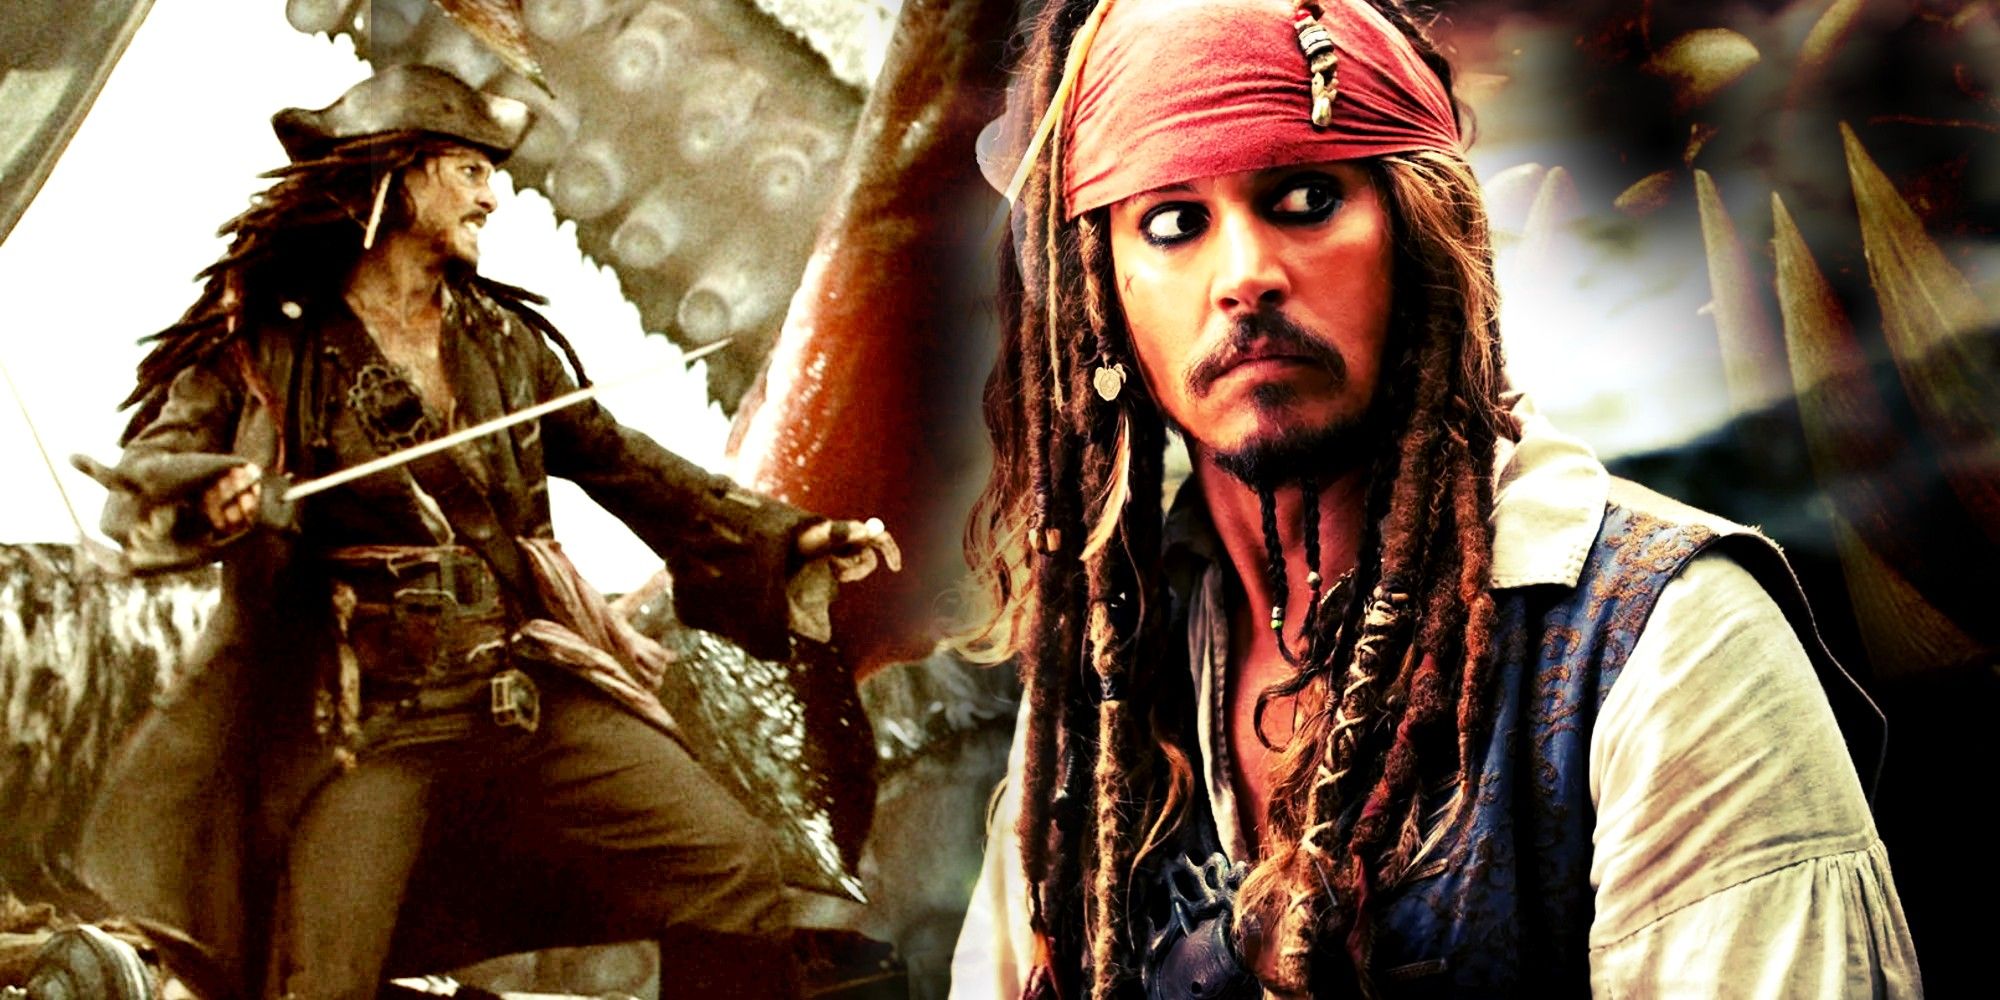 Jack-Sparrow stabbing the kraken in Pirates of the Caribbean